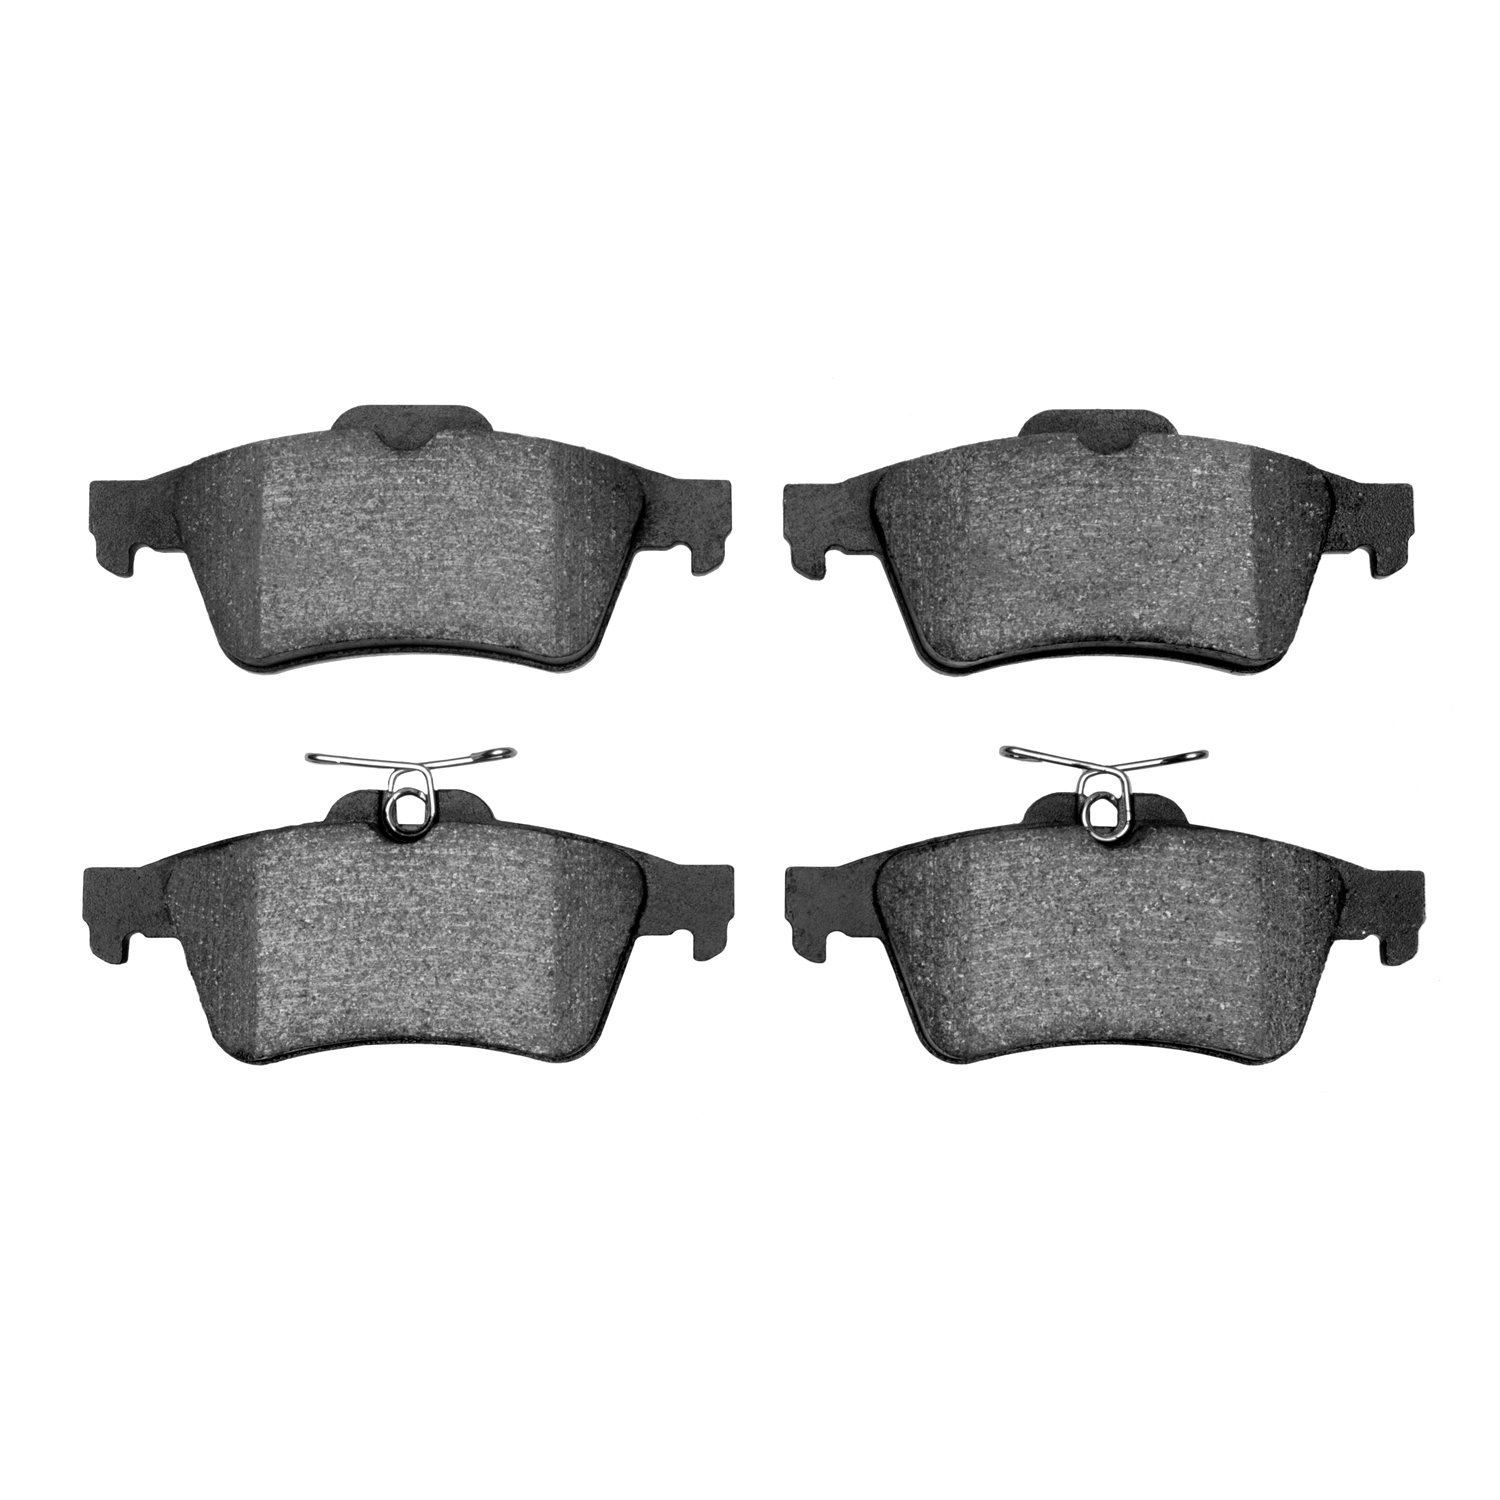 1310-1095-00 3000-Series Ceramic Brake Pads, Fits Select Multiple Makes/Models, Position: Rear